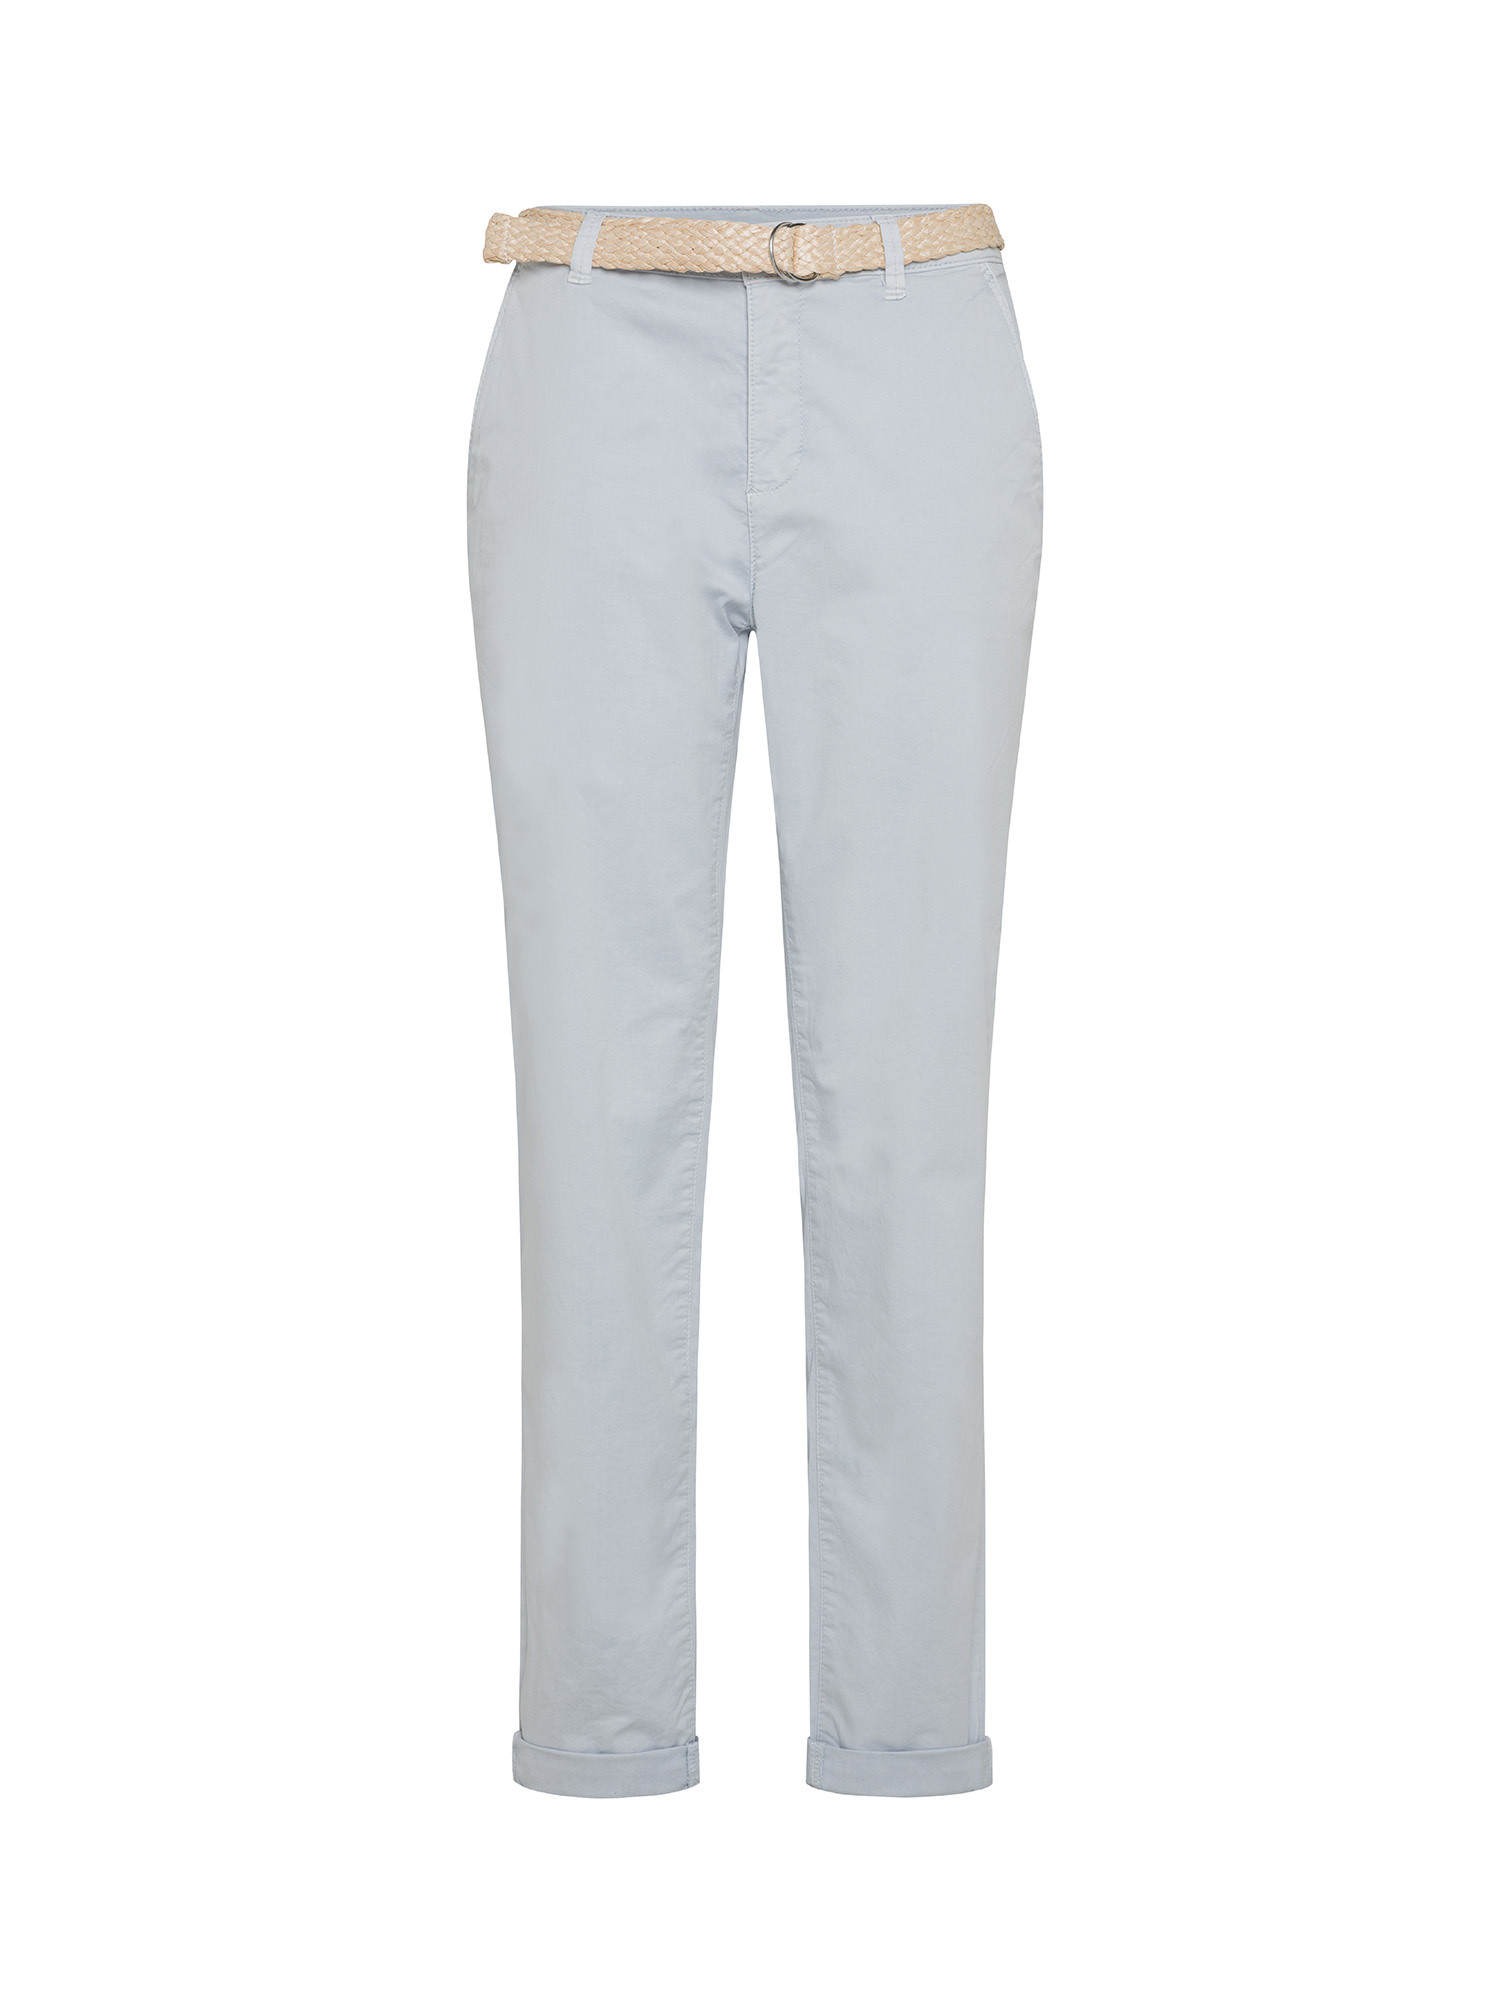 Esprit - Pantaloni chino cropped con cintura, Azzurro, large image number 0